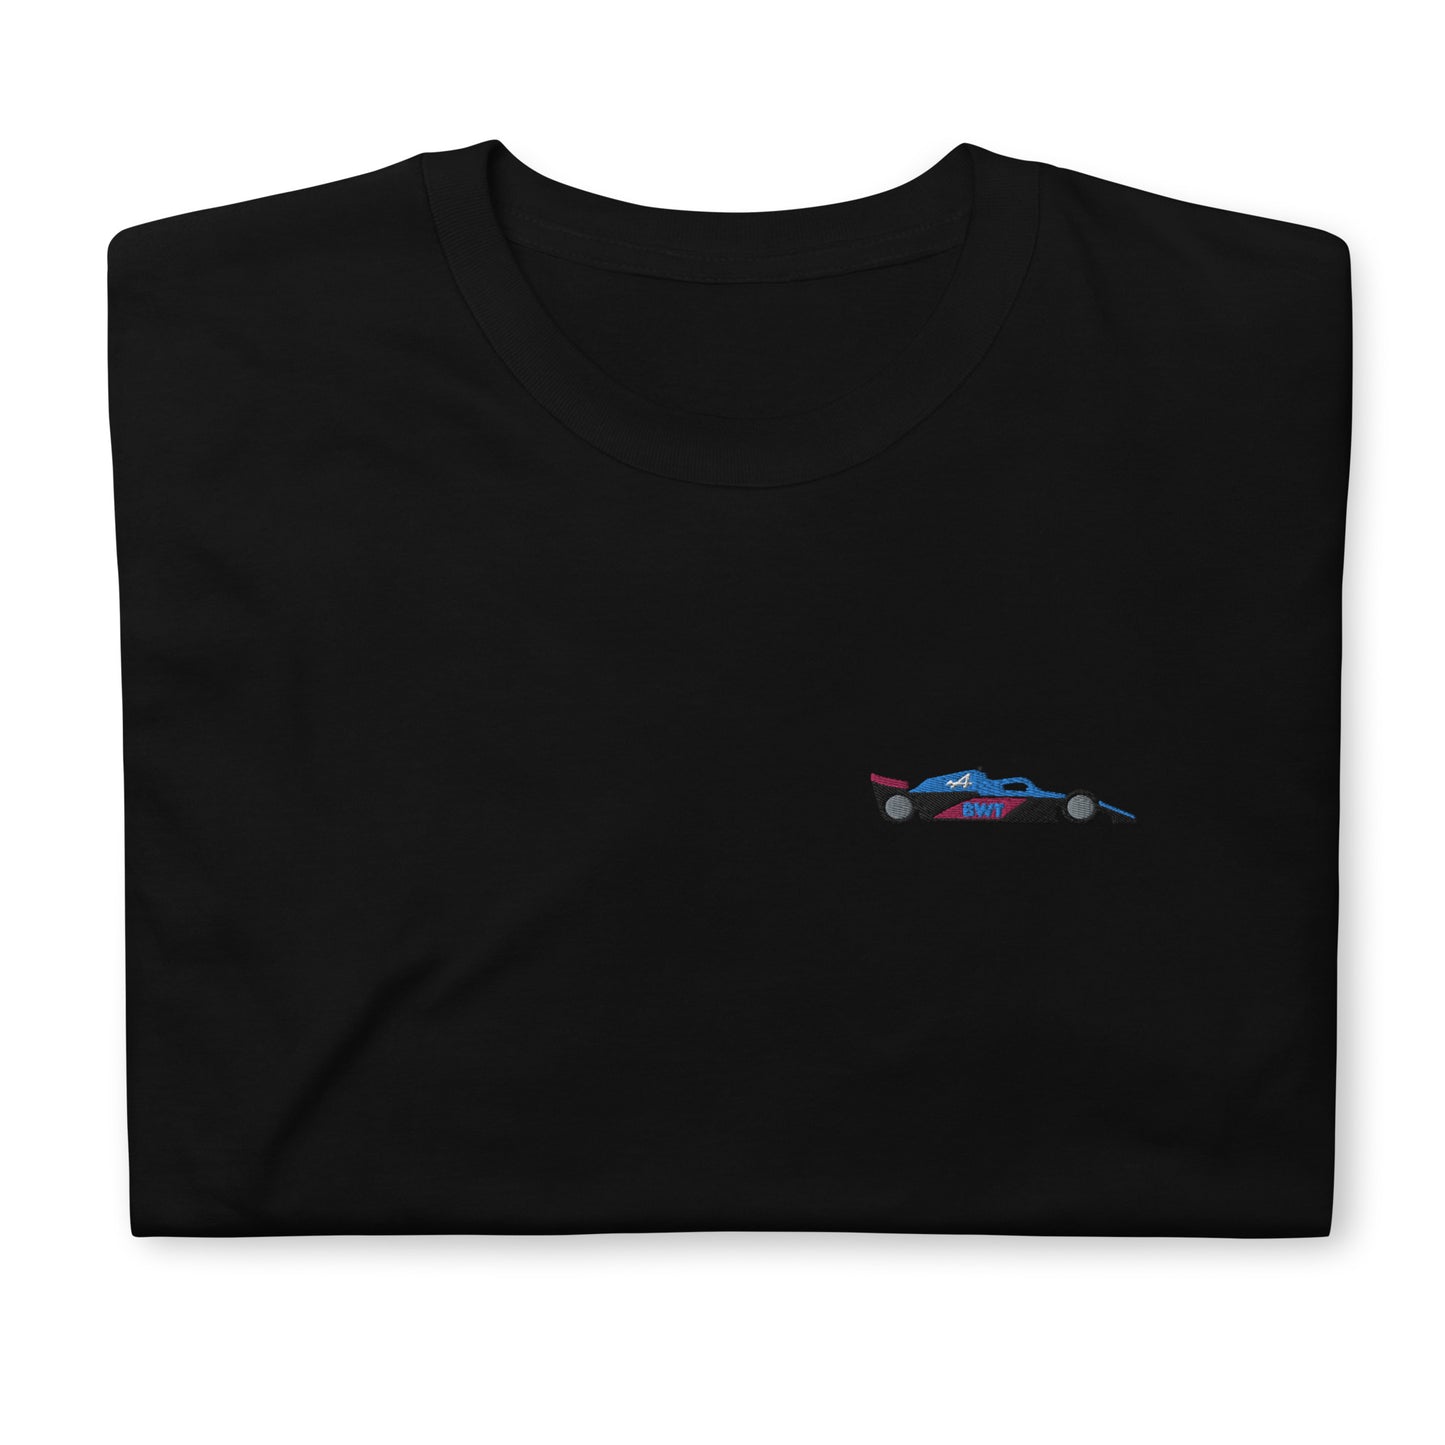 Embroidered Alpine F1 Car Unisex T-Shirt black front